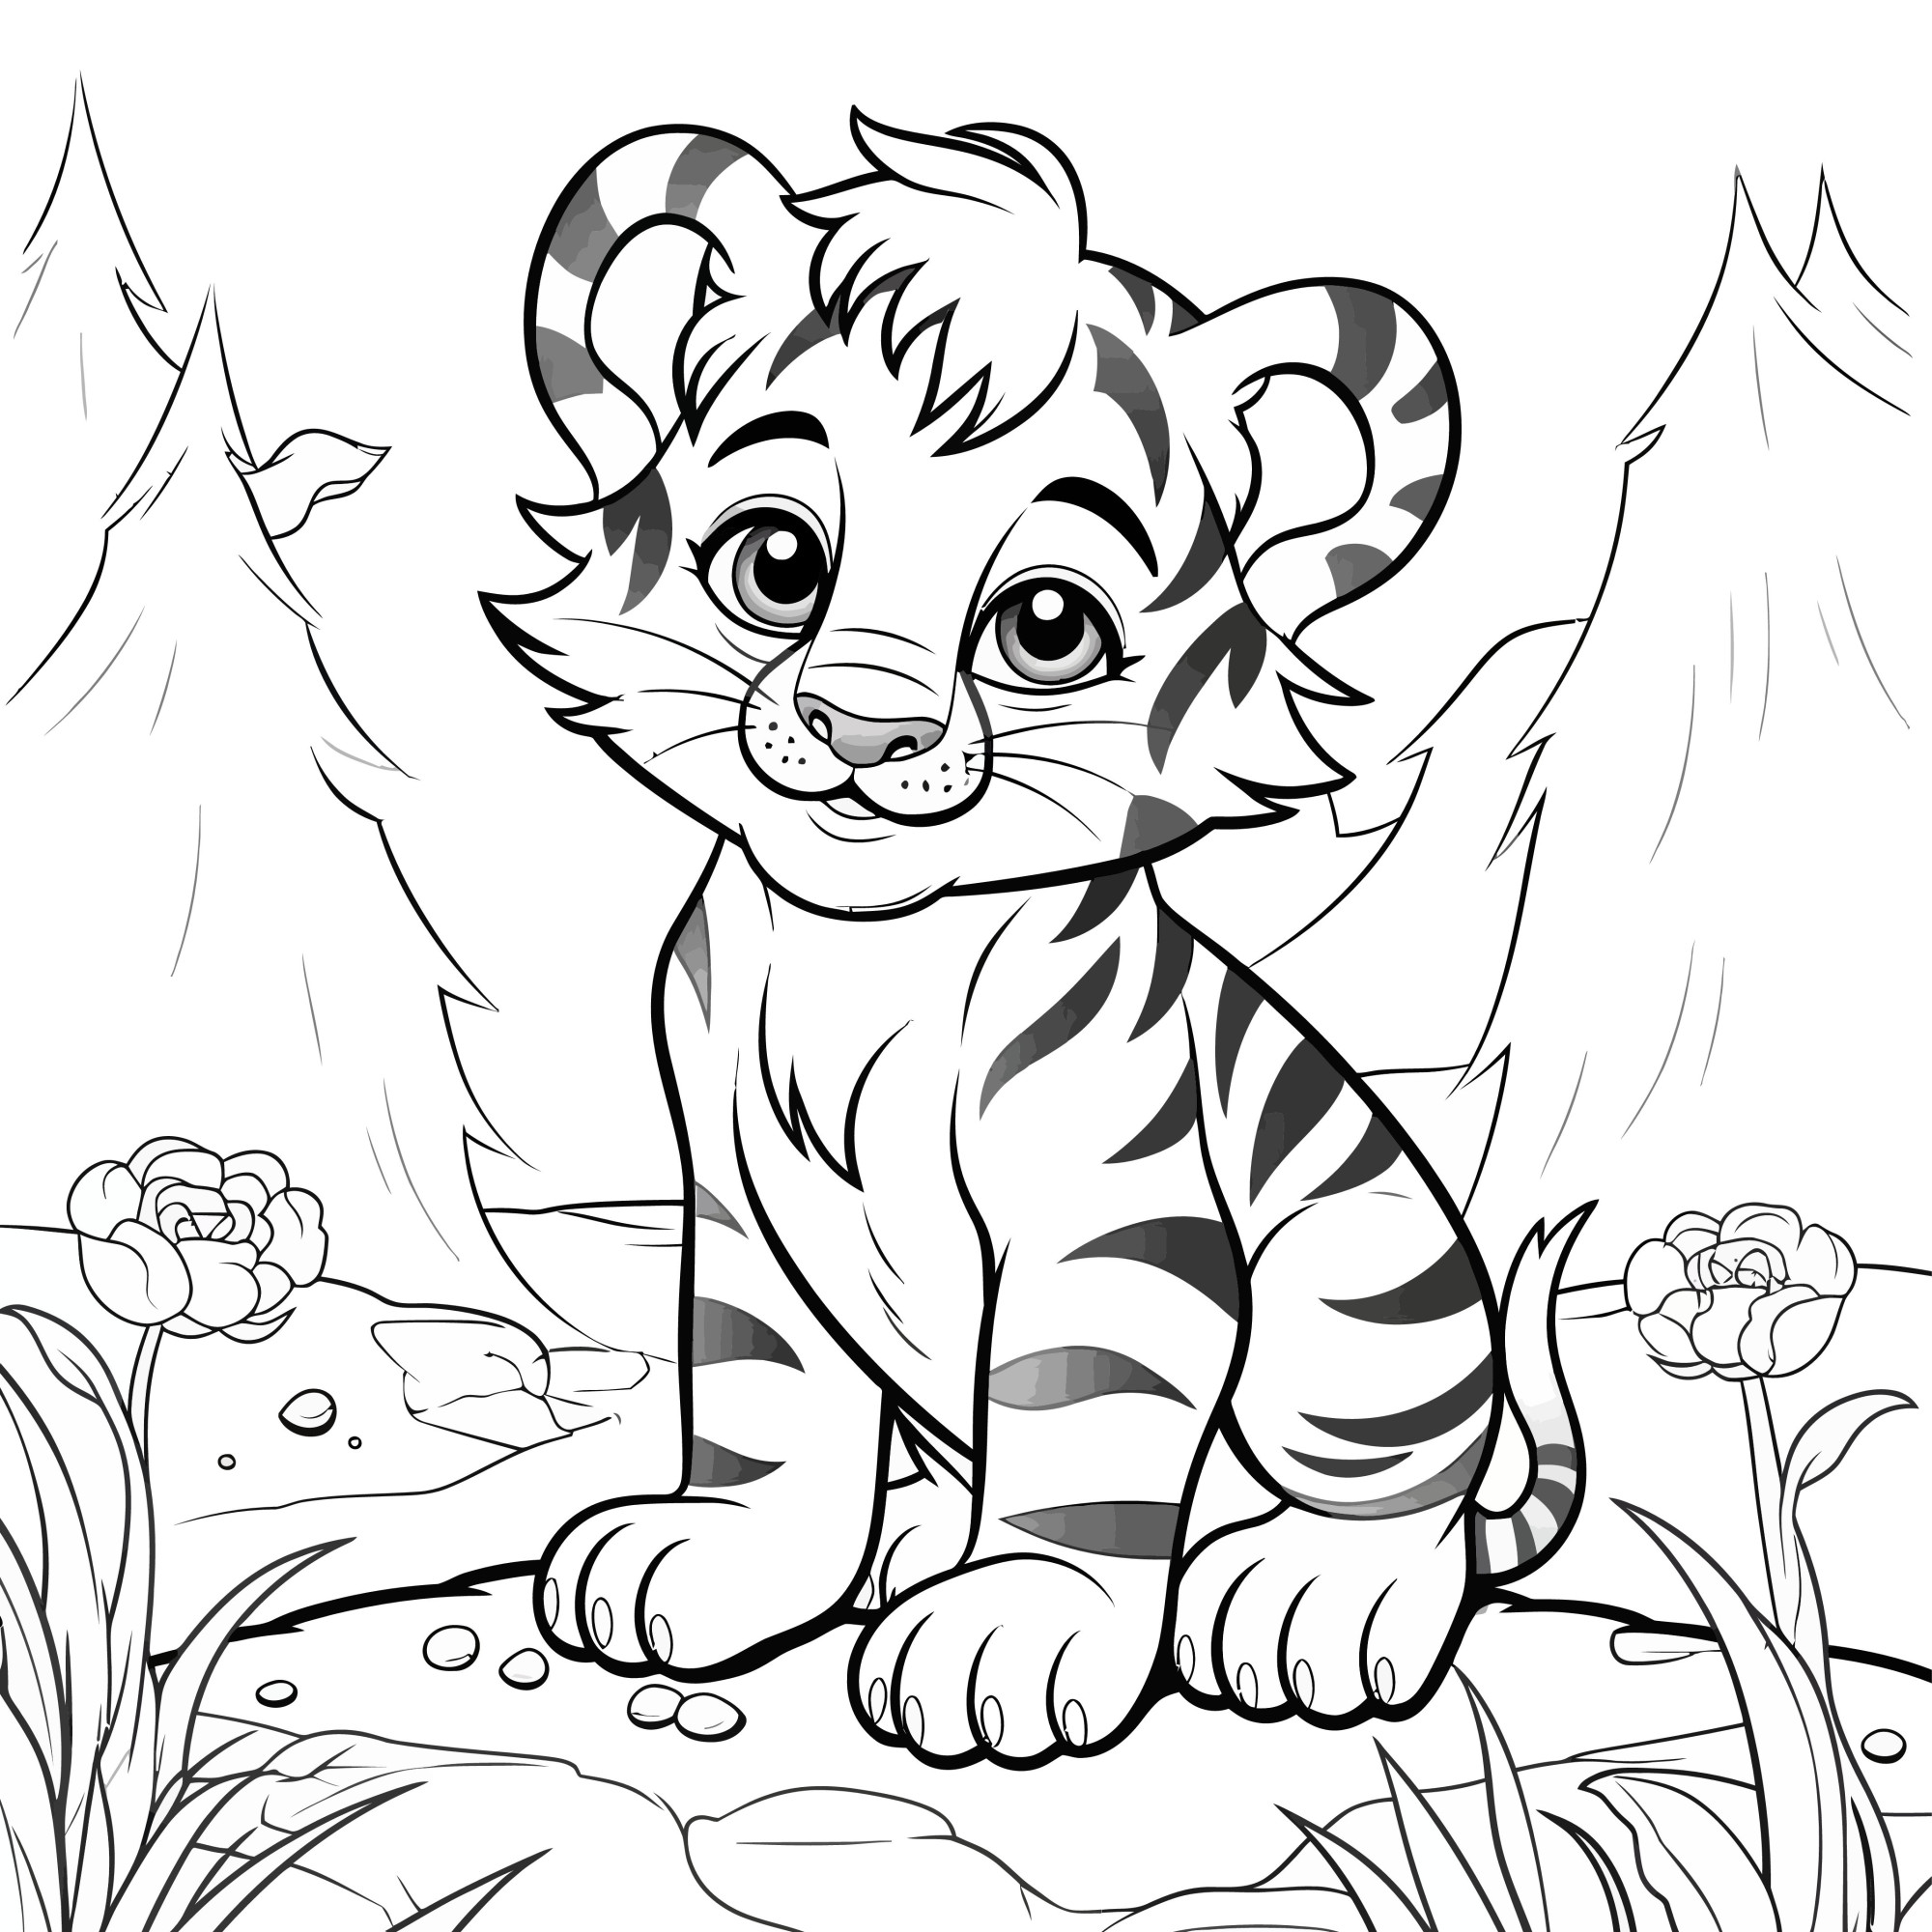 Раскраска для детей: тигренок на поляне на фоне леса